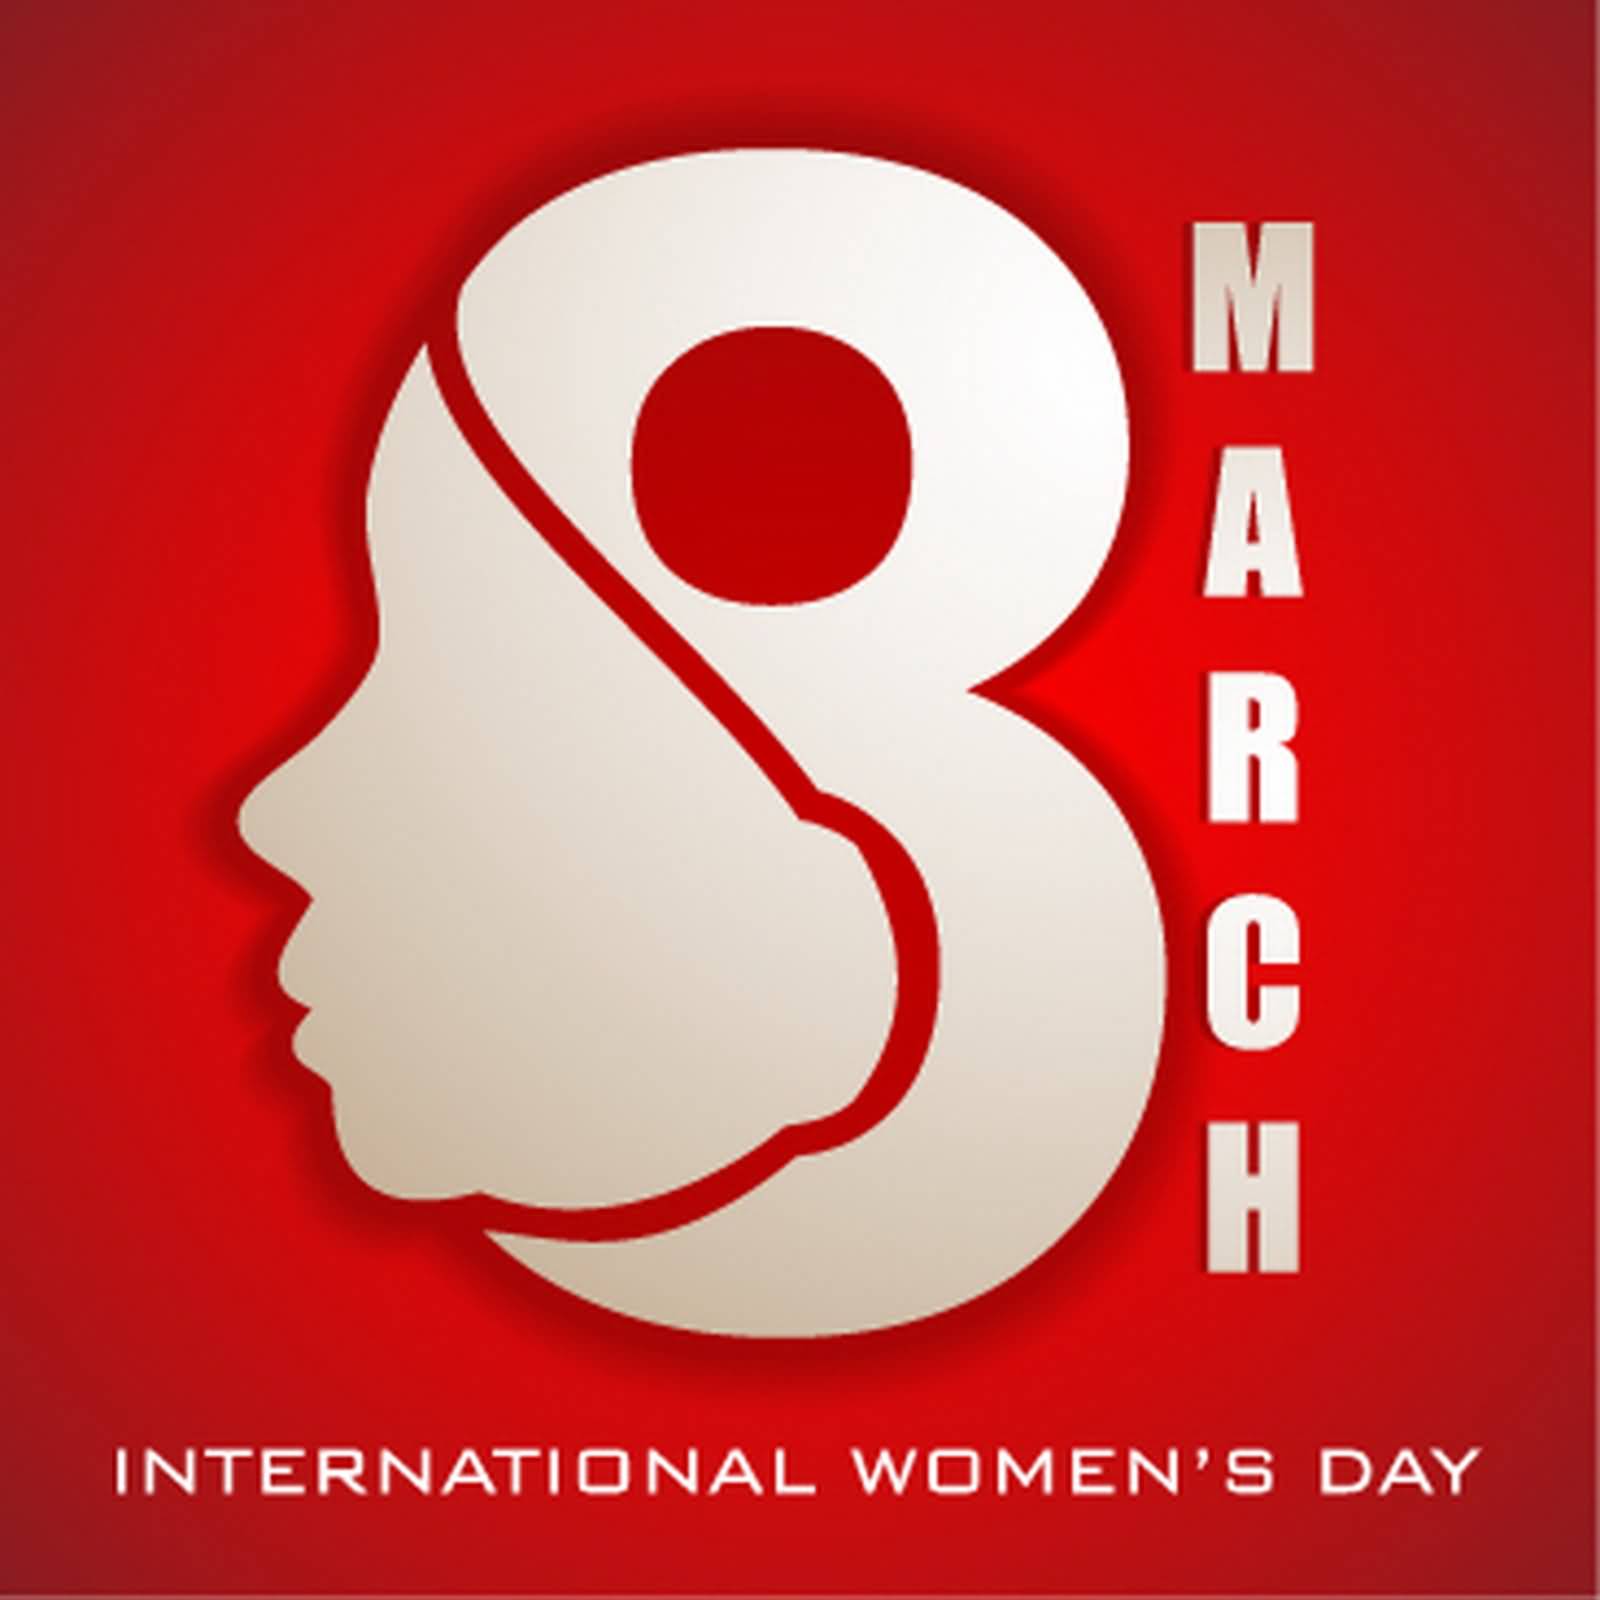 8 March Internatinal Women's Day Card